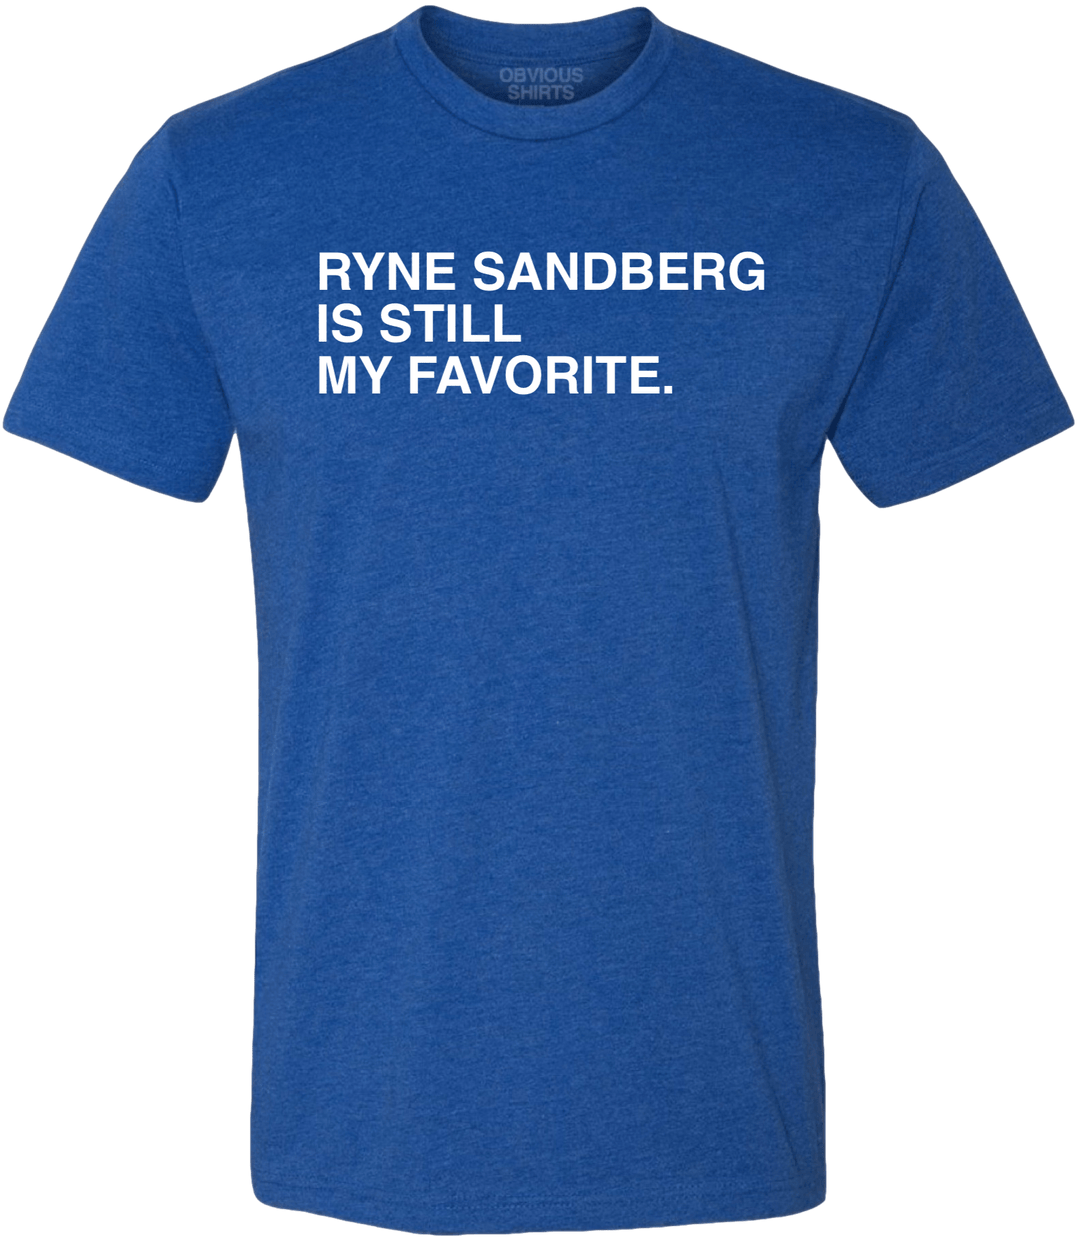 RYNE SANDBERG IS STILL MY FAVORITE. - OBVIOUS SHIRTS